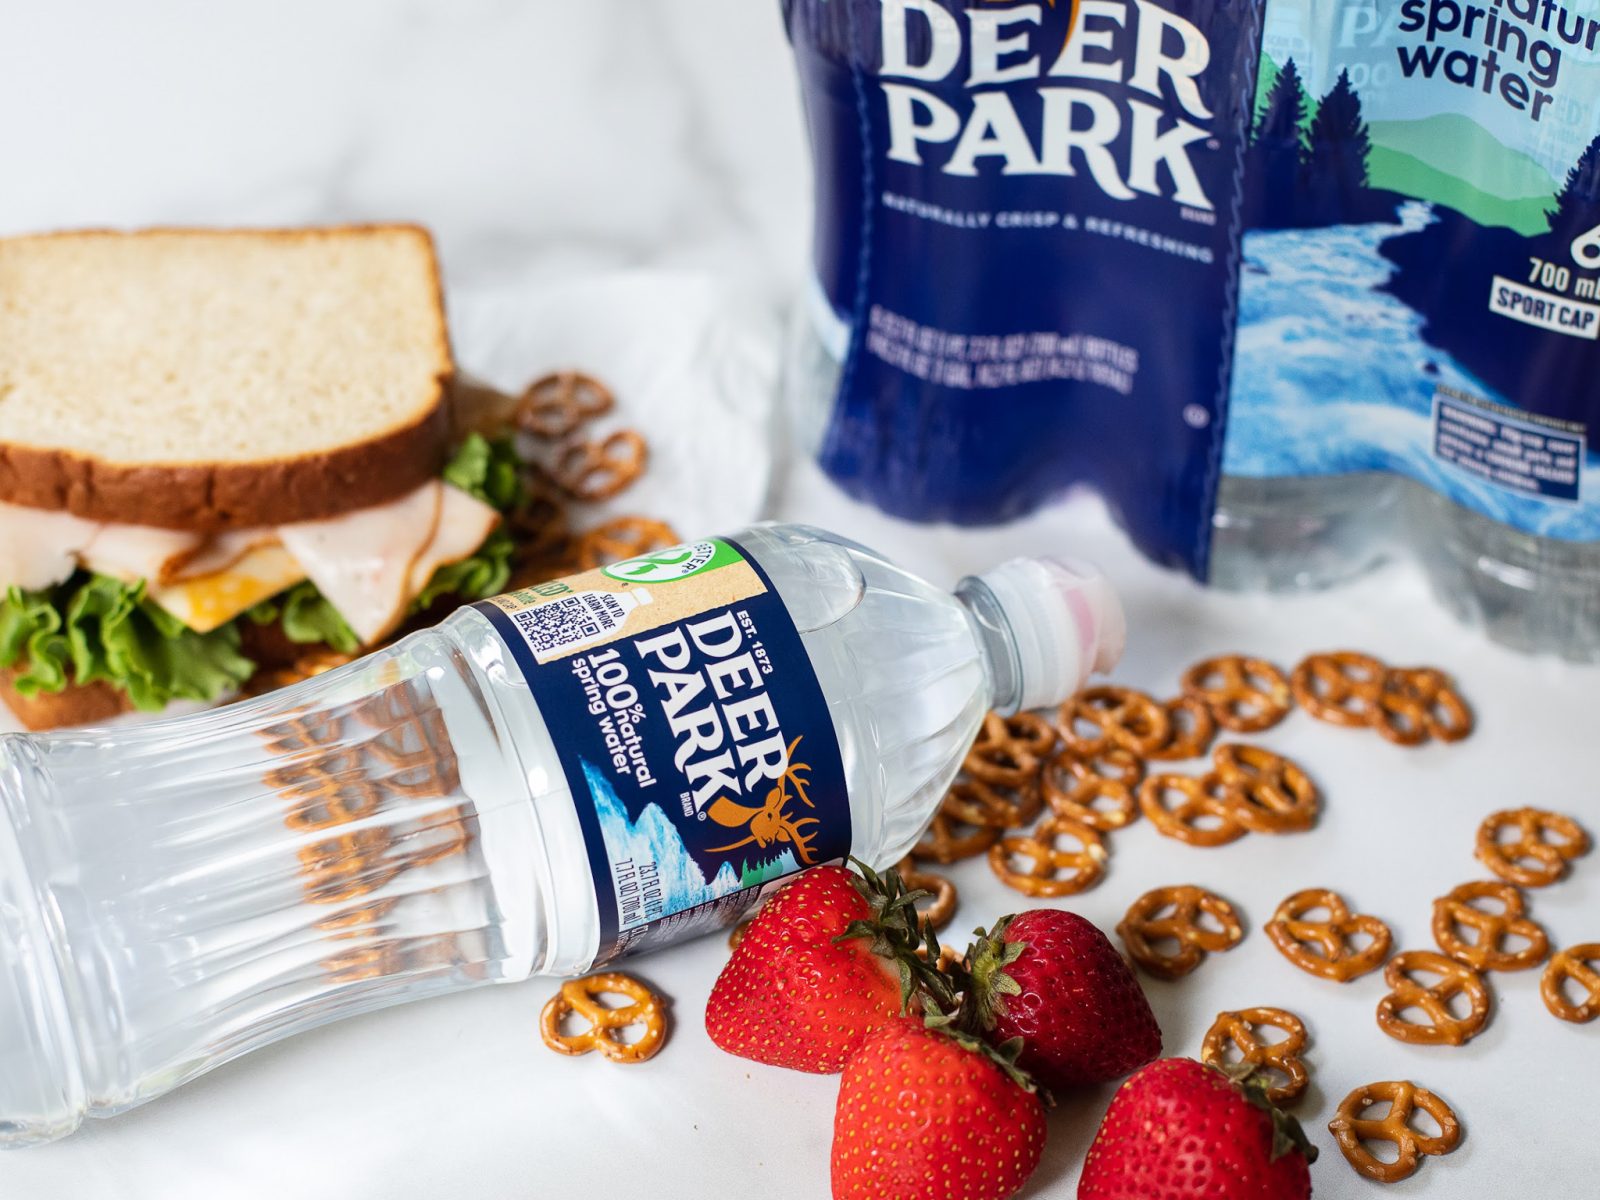 Deer Park Brand Natural Spring Water 6-Pack Just $1.75 At Publix